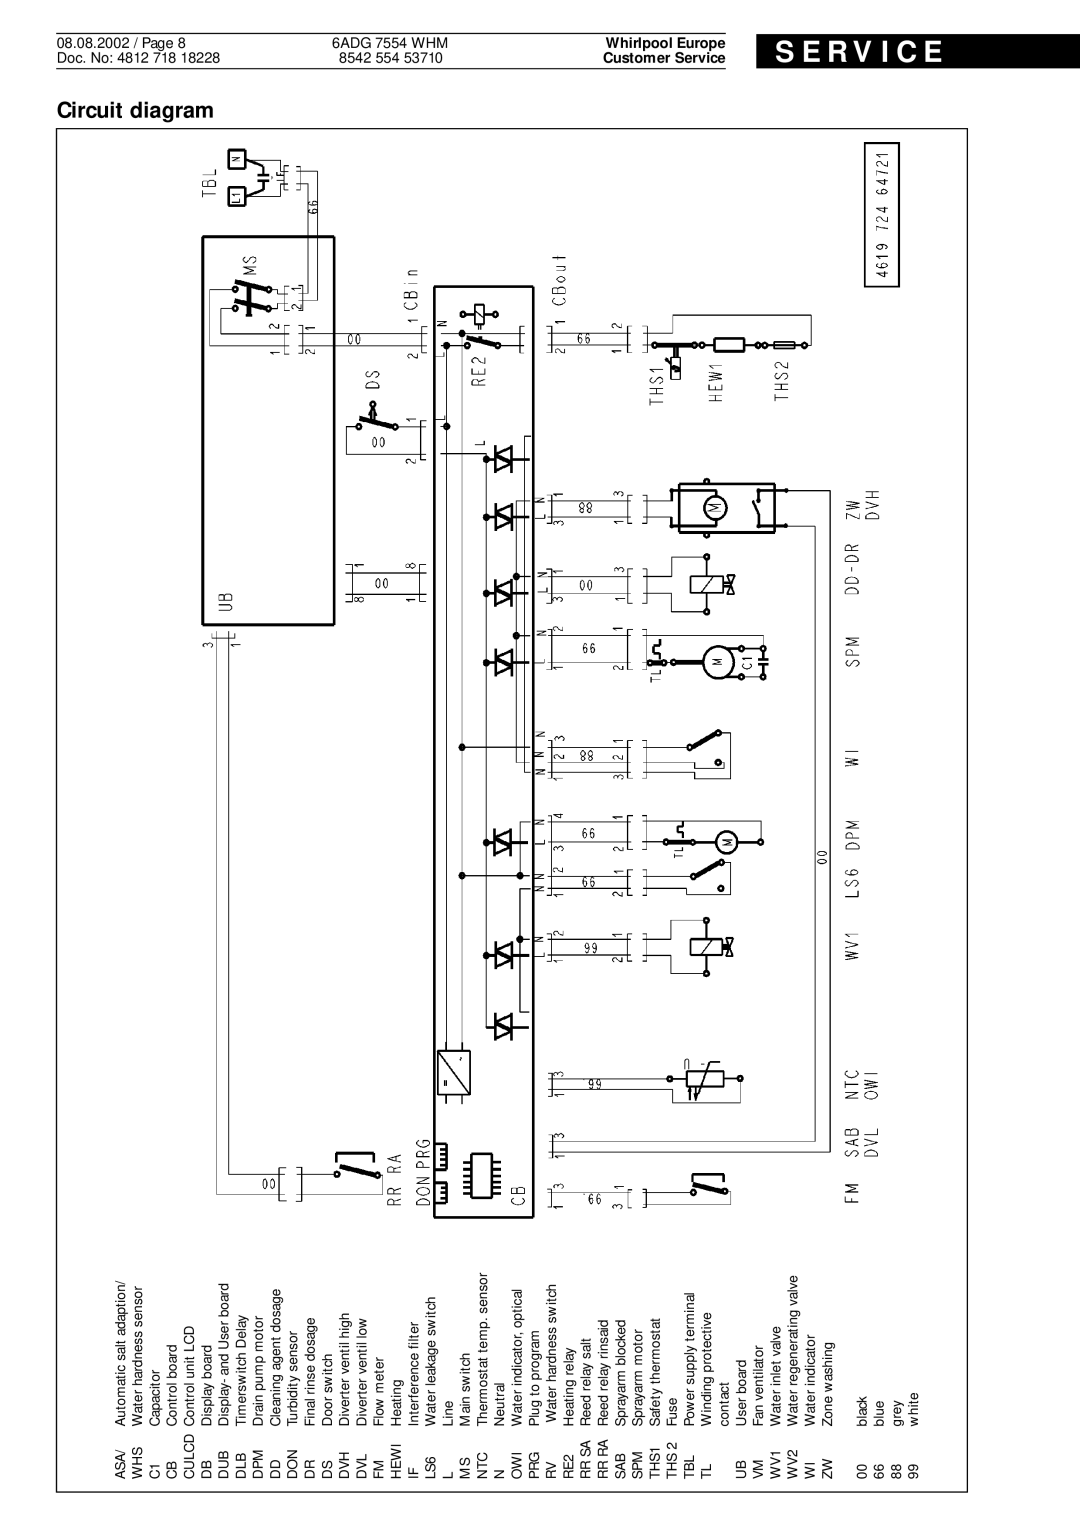 Whirlpool 6ADG 7554 WHM service manual Circuit diagram, Whirlpool Europe Customer Service S E R V I C E 